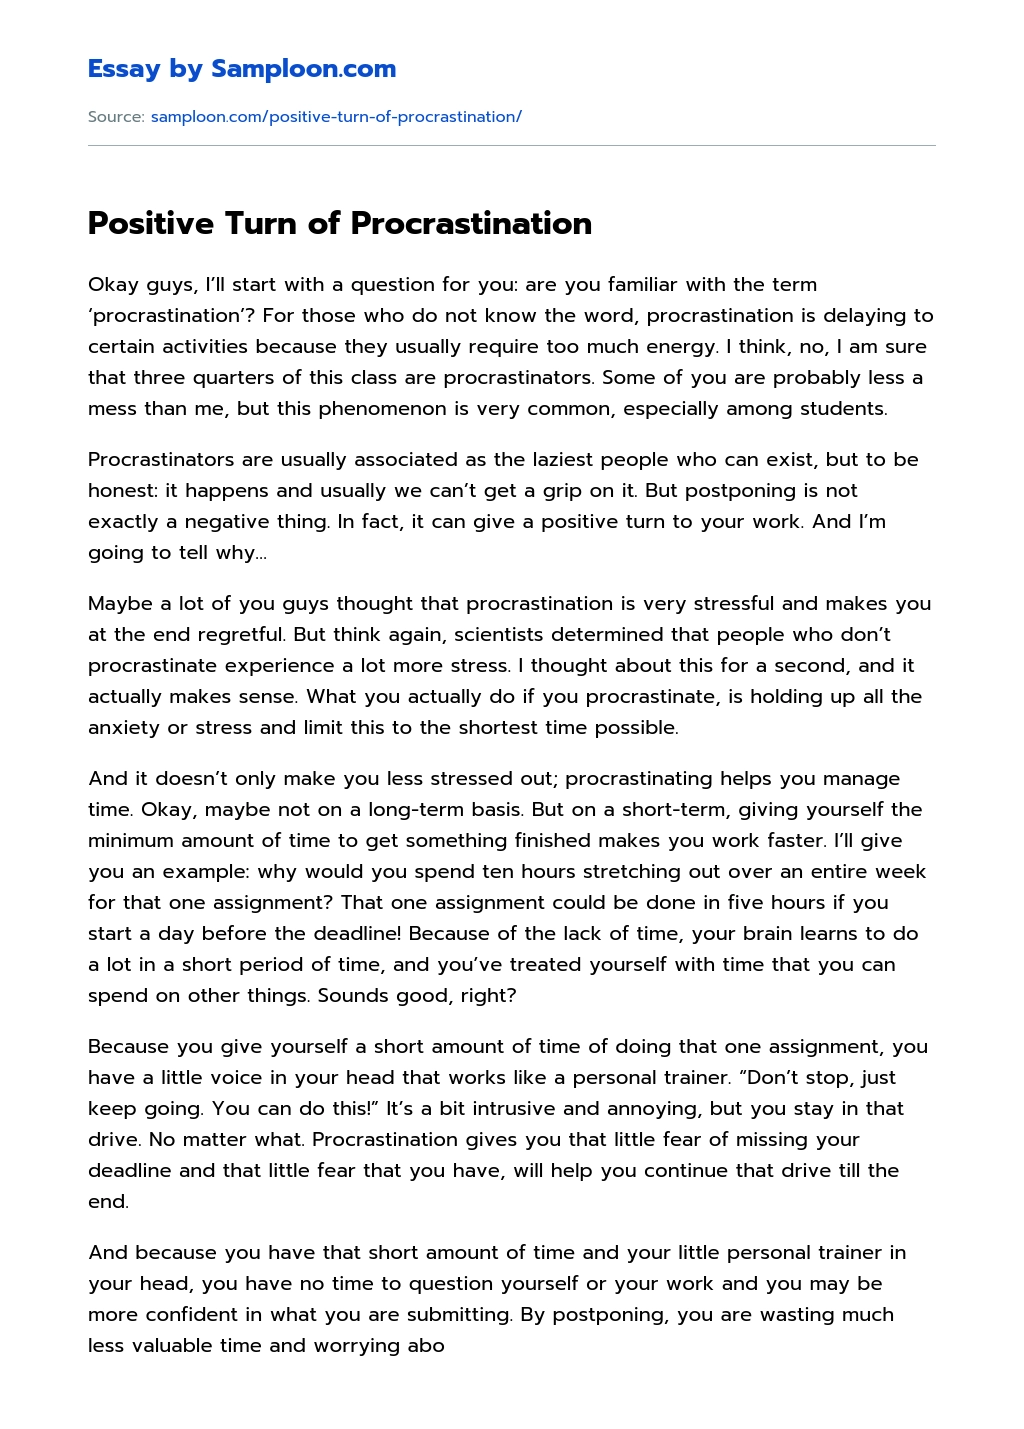 Positive Turn of Procrastination essay